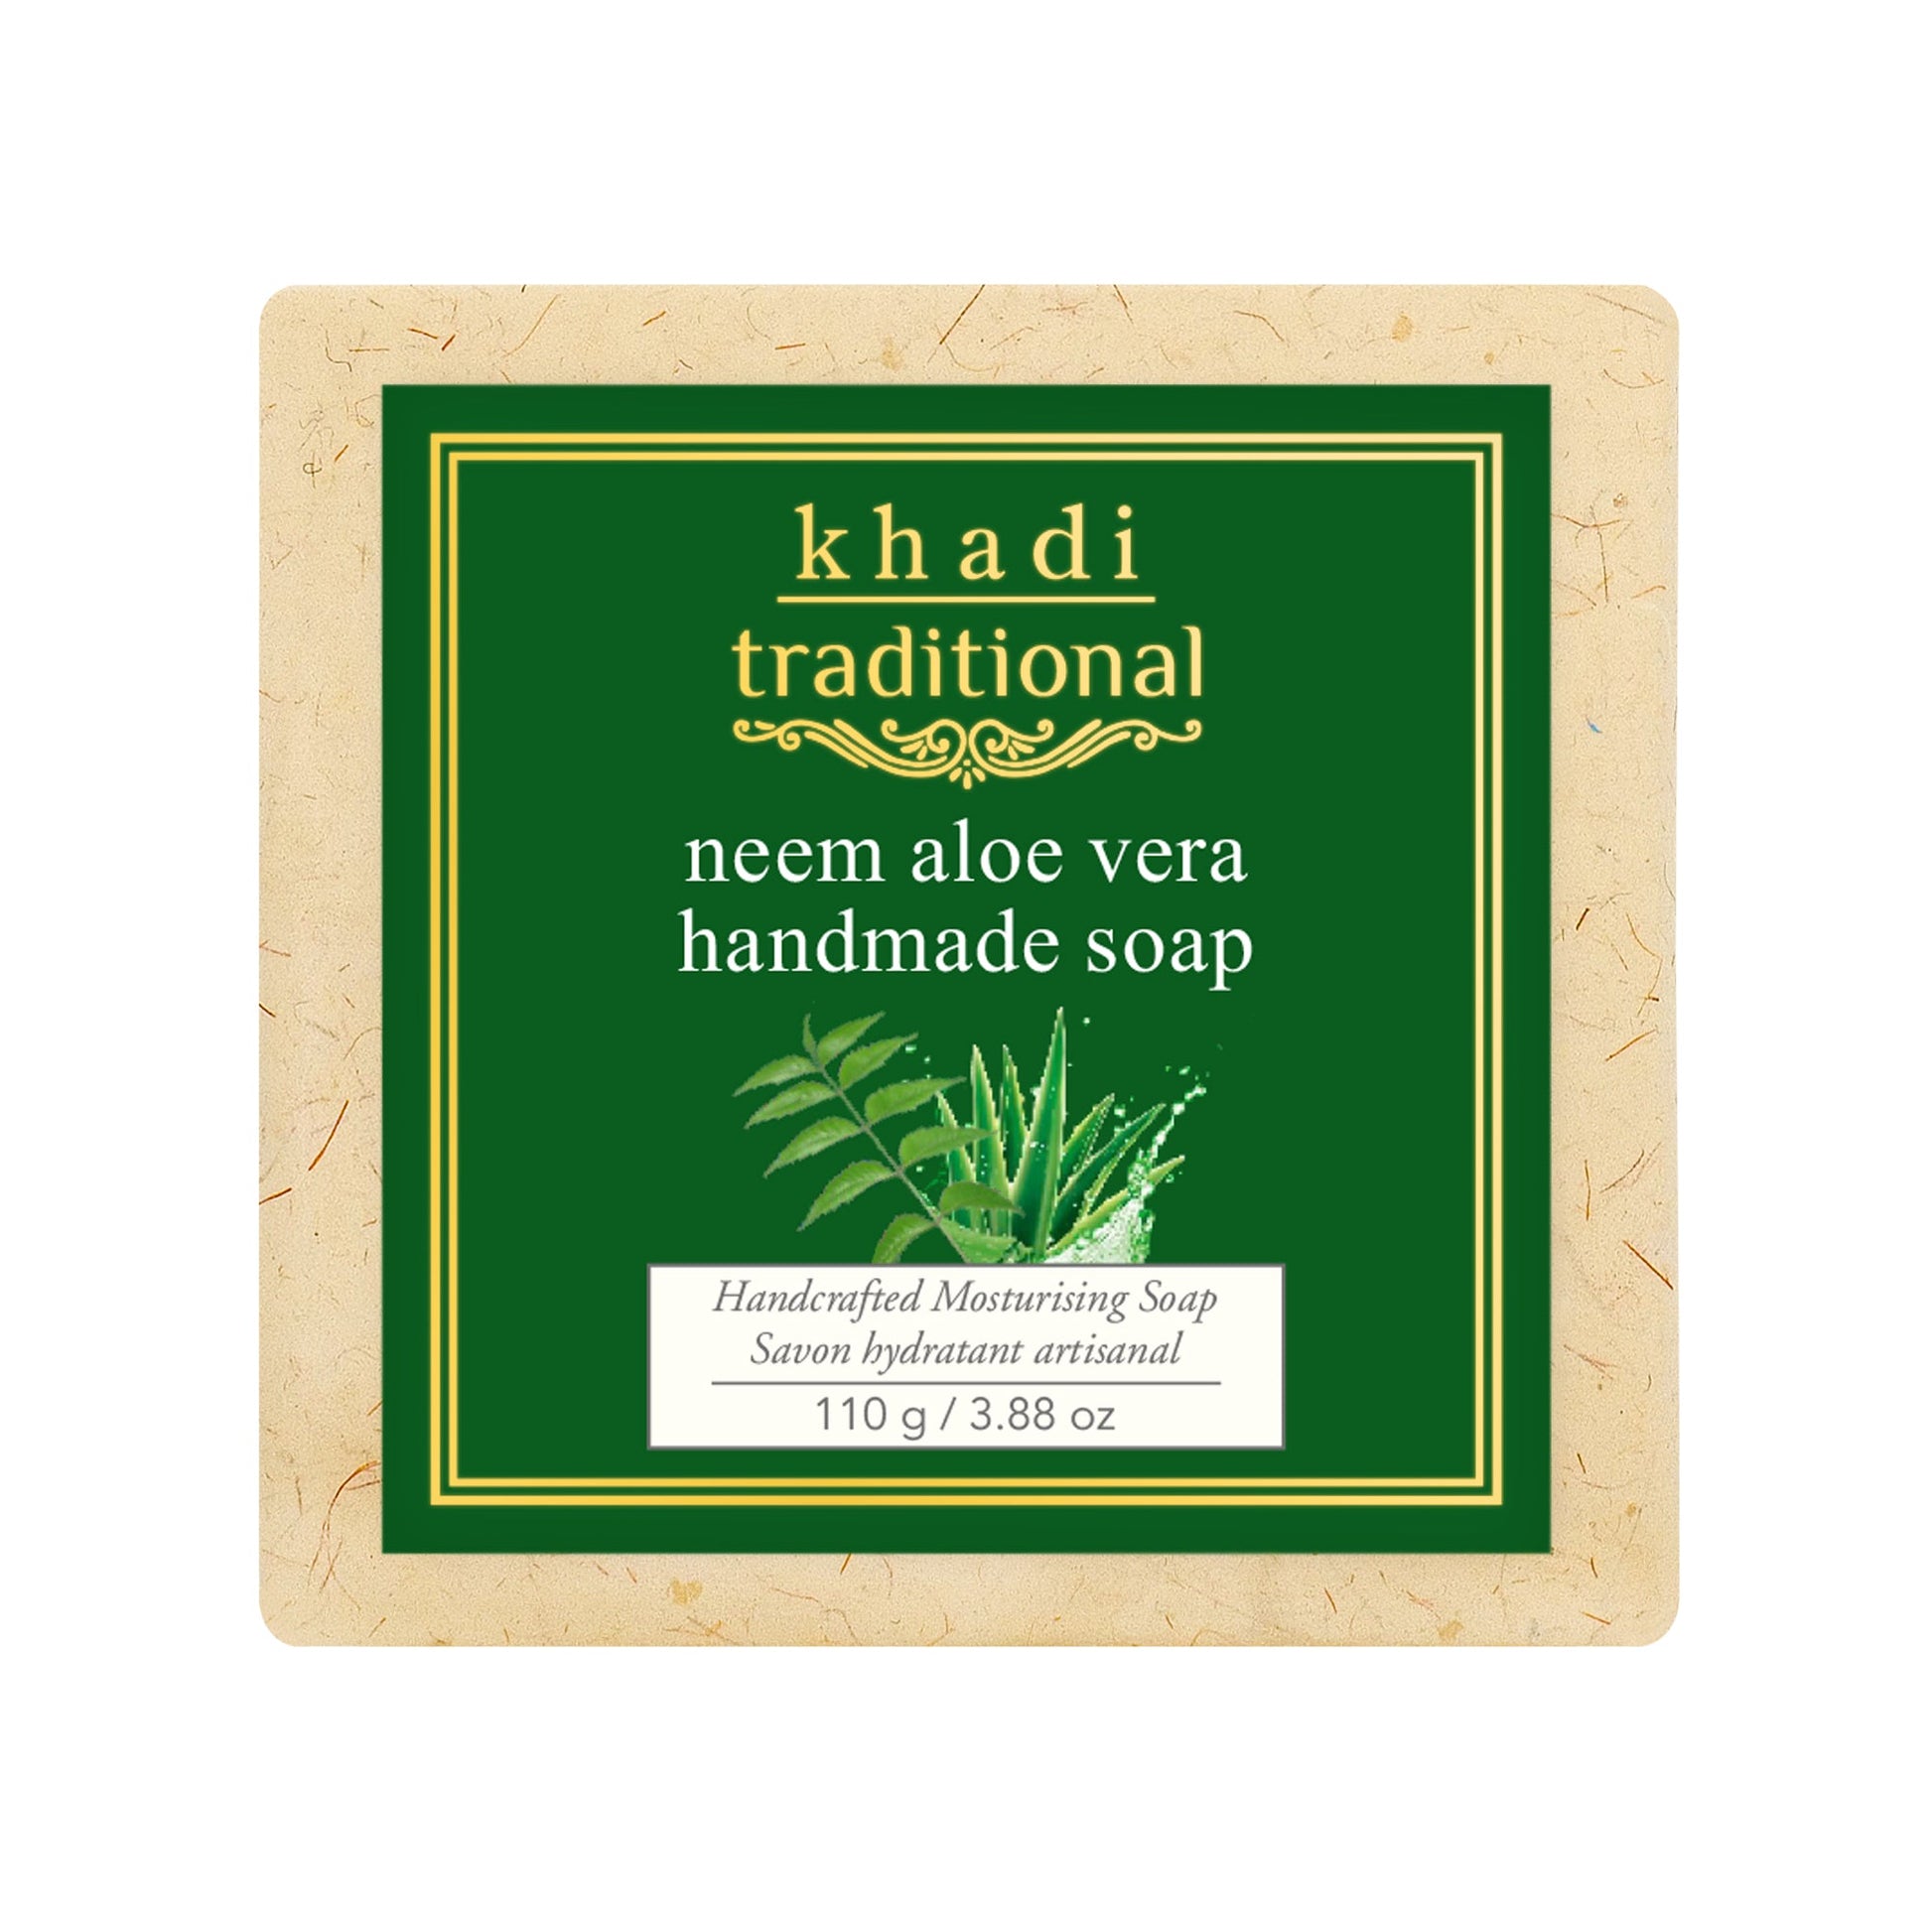 Khadi Traditional Neem Aloe Vera Handmade Soap